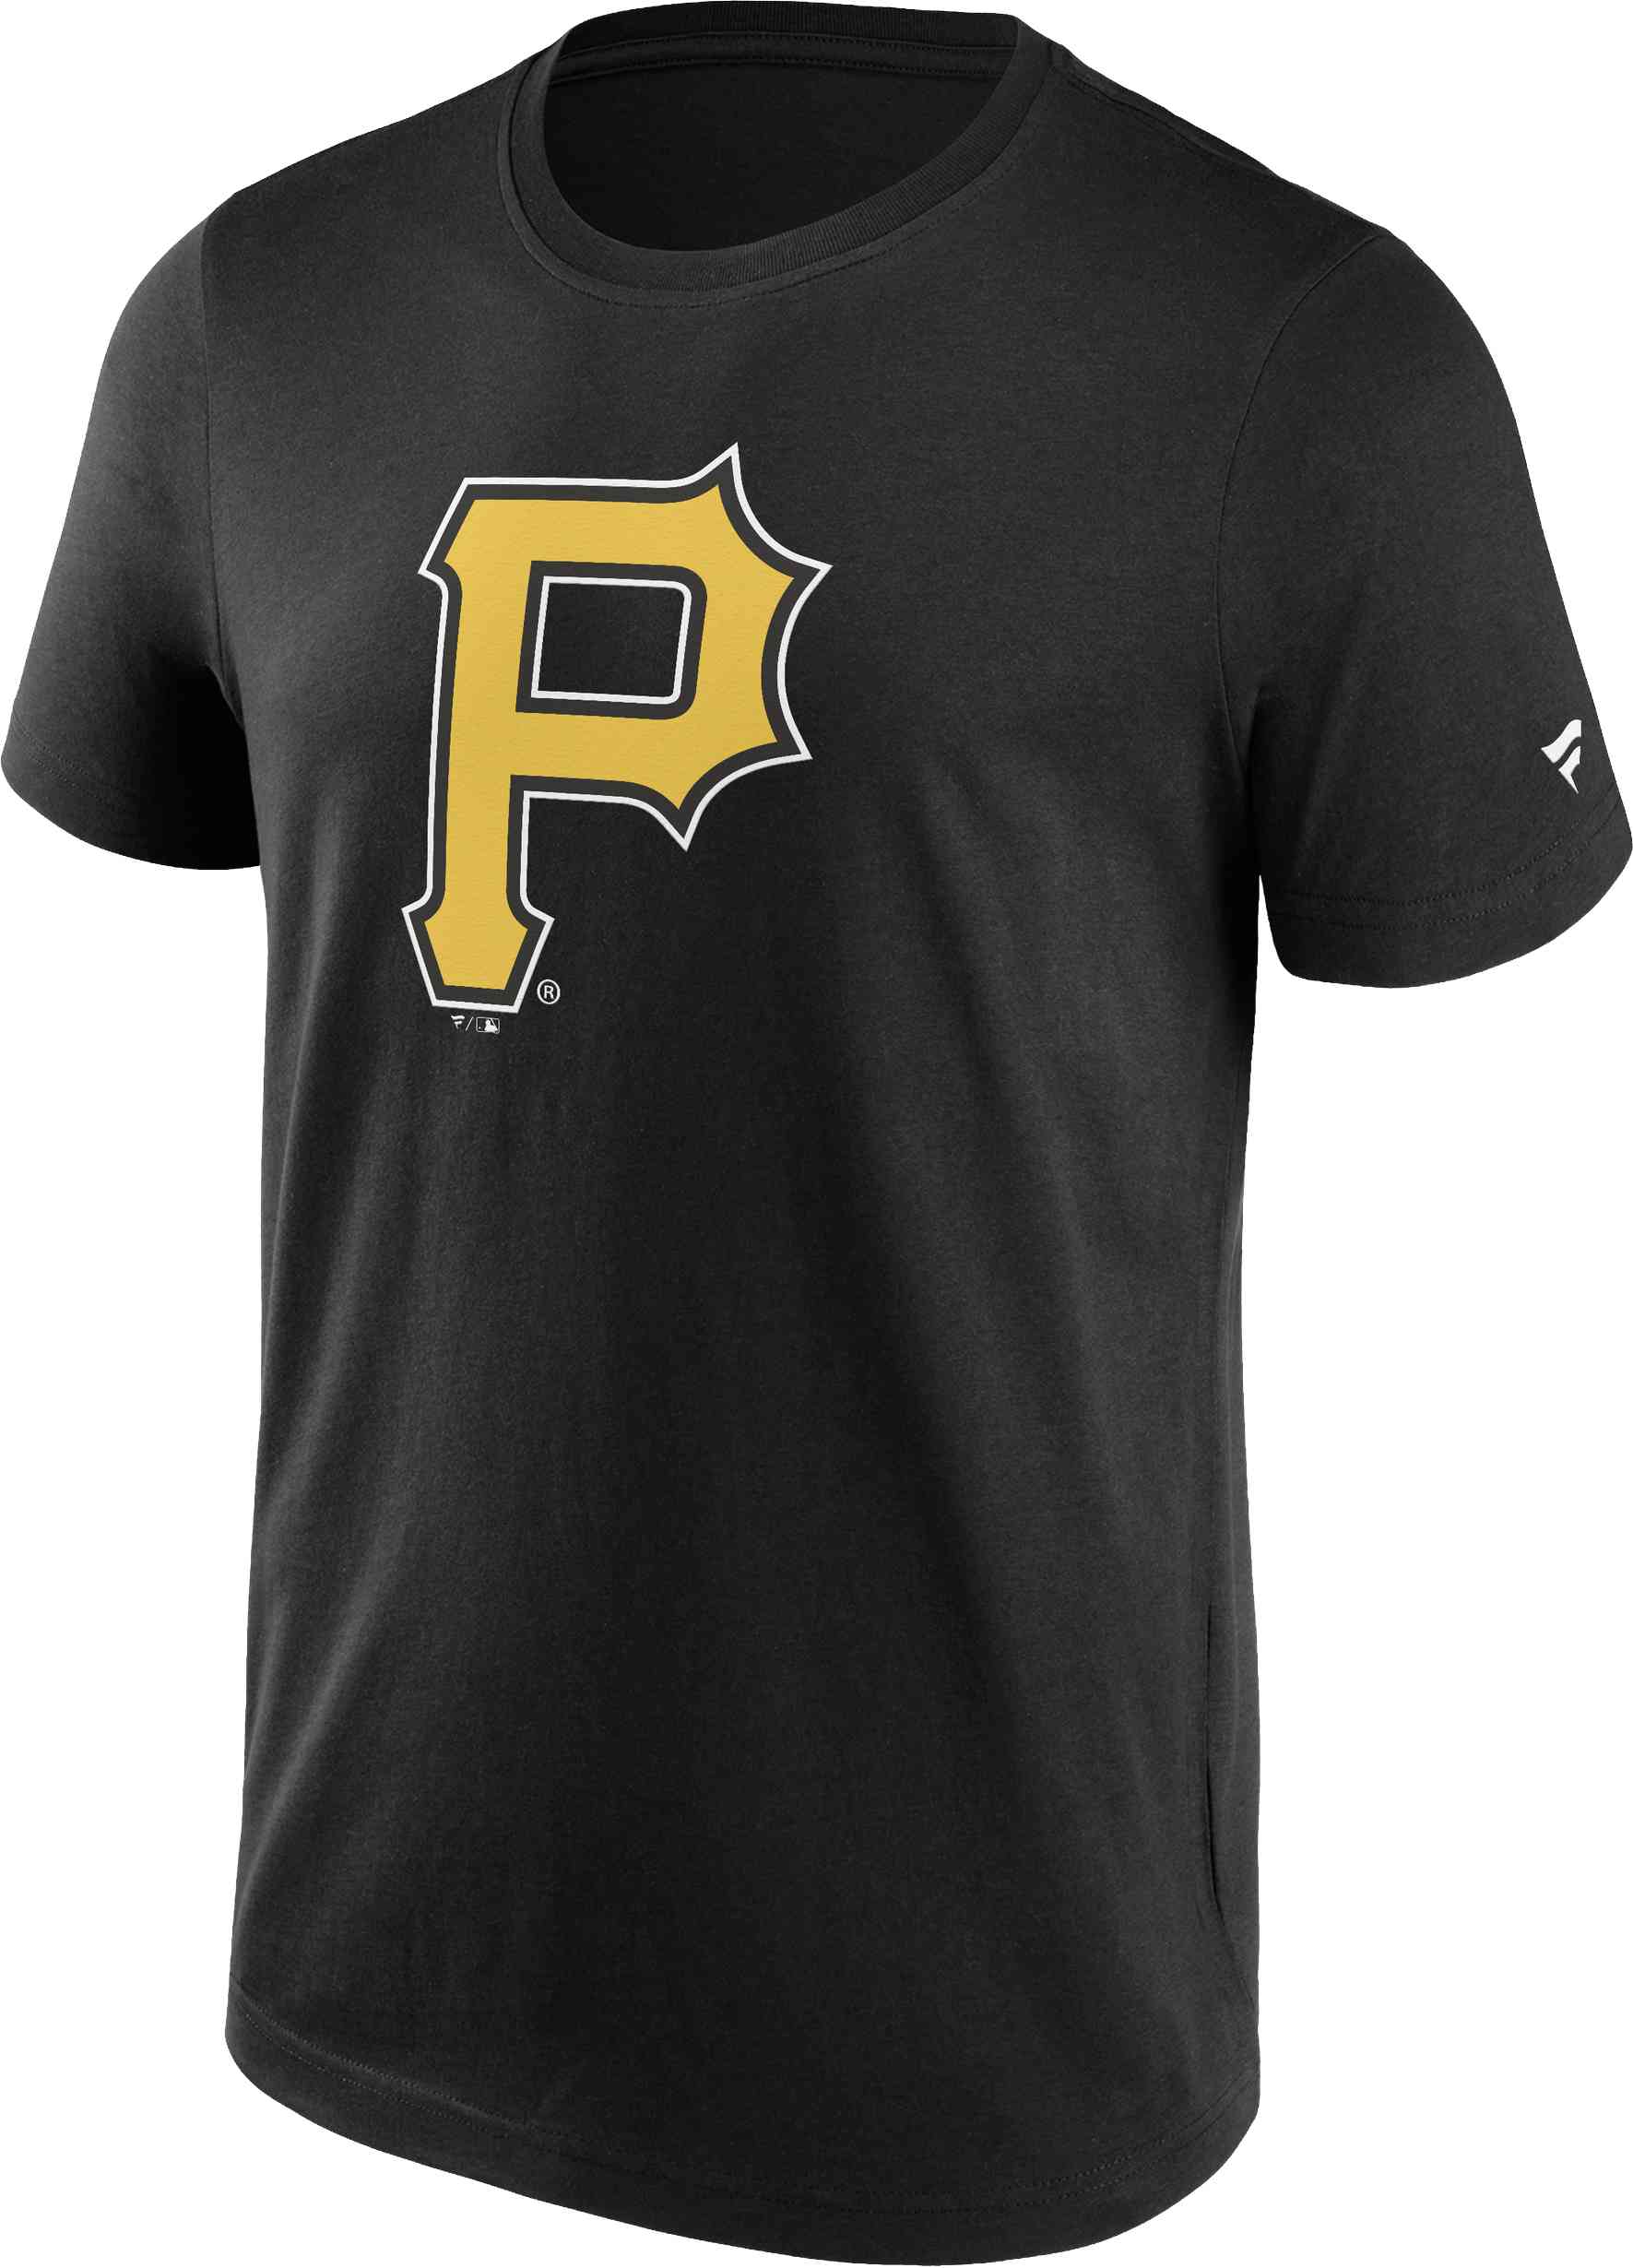 Fanatics - MLB Pittsburgh Pirates Primary Logo Graphic T-Shirt